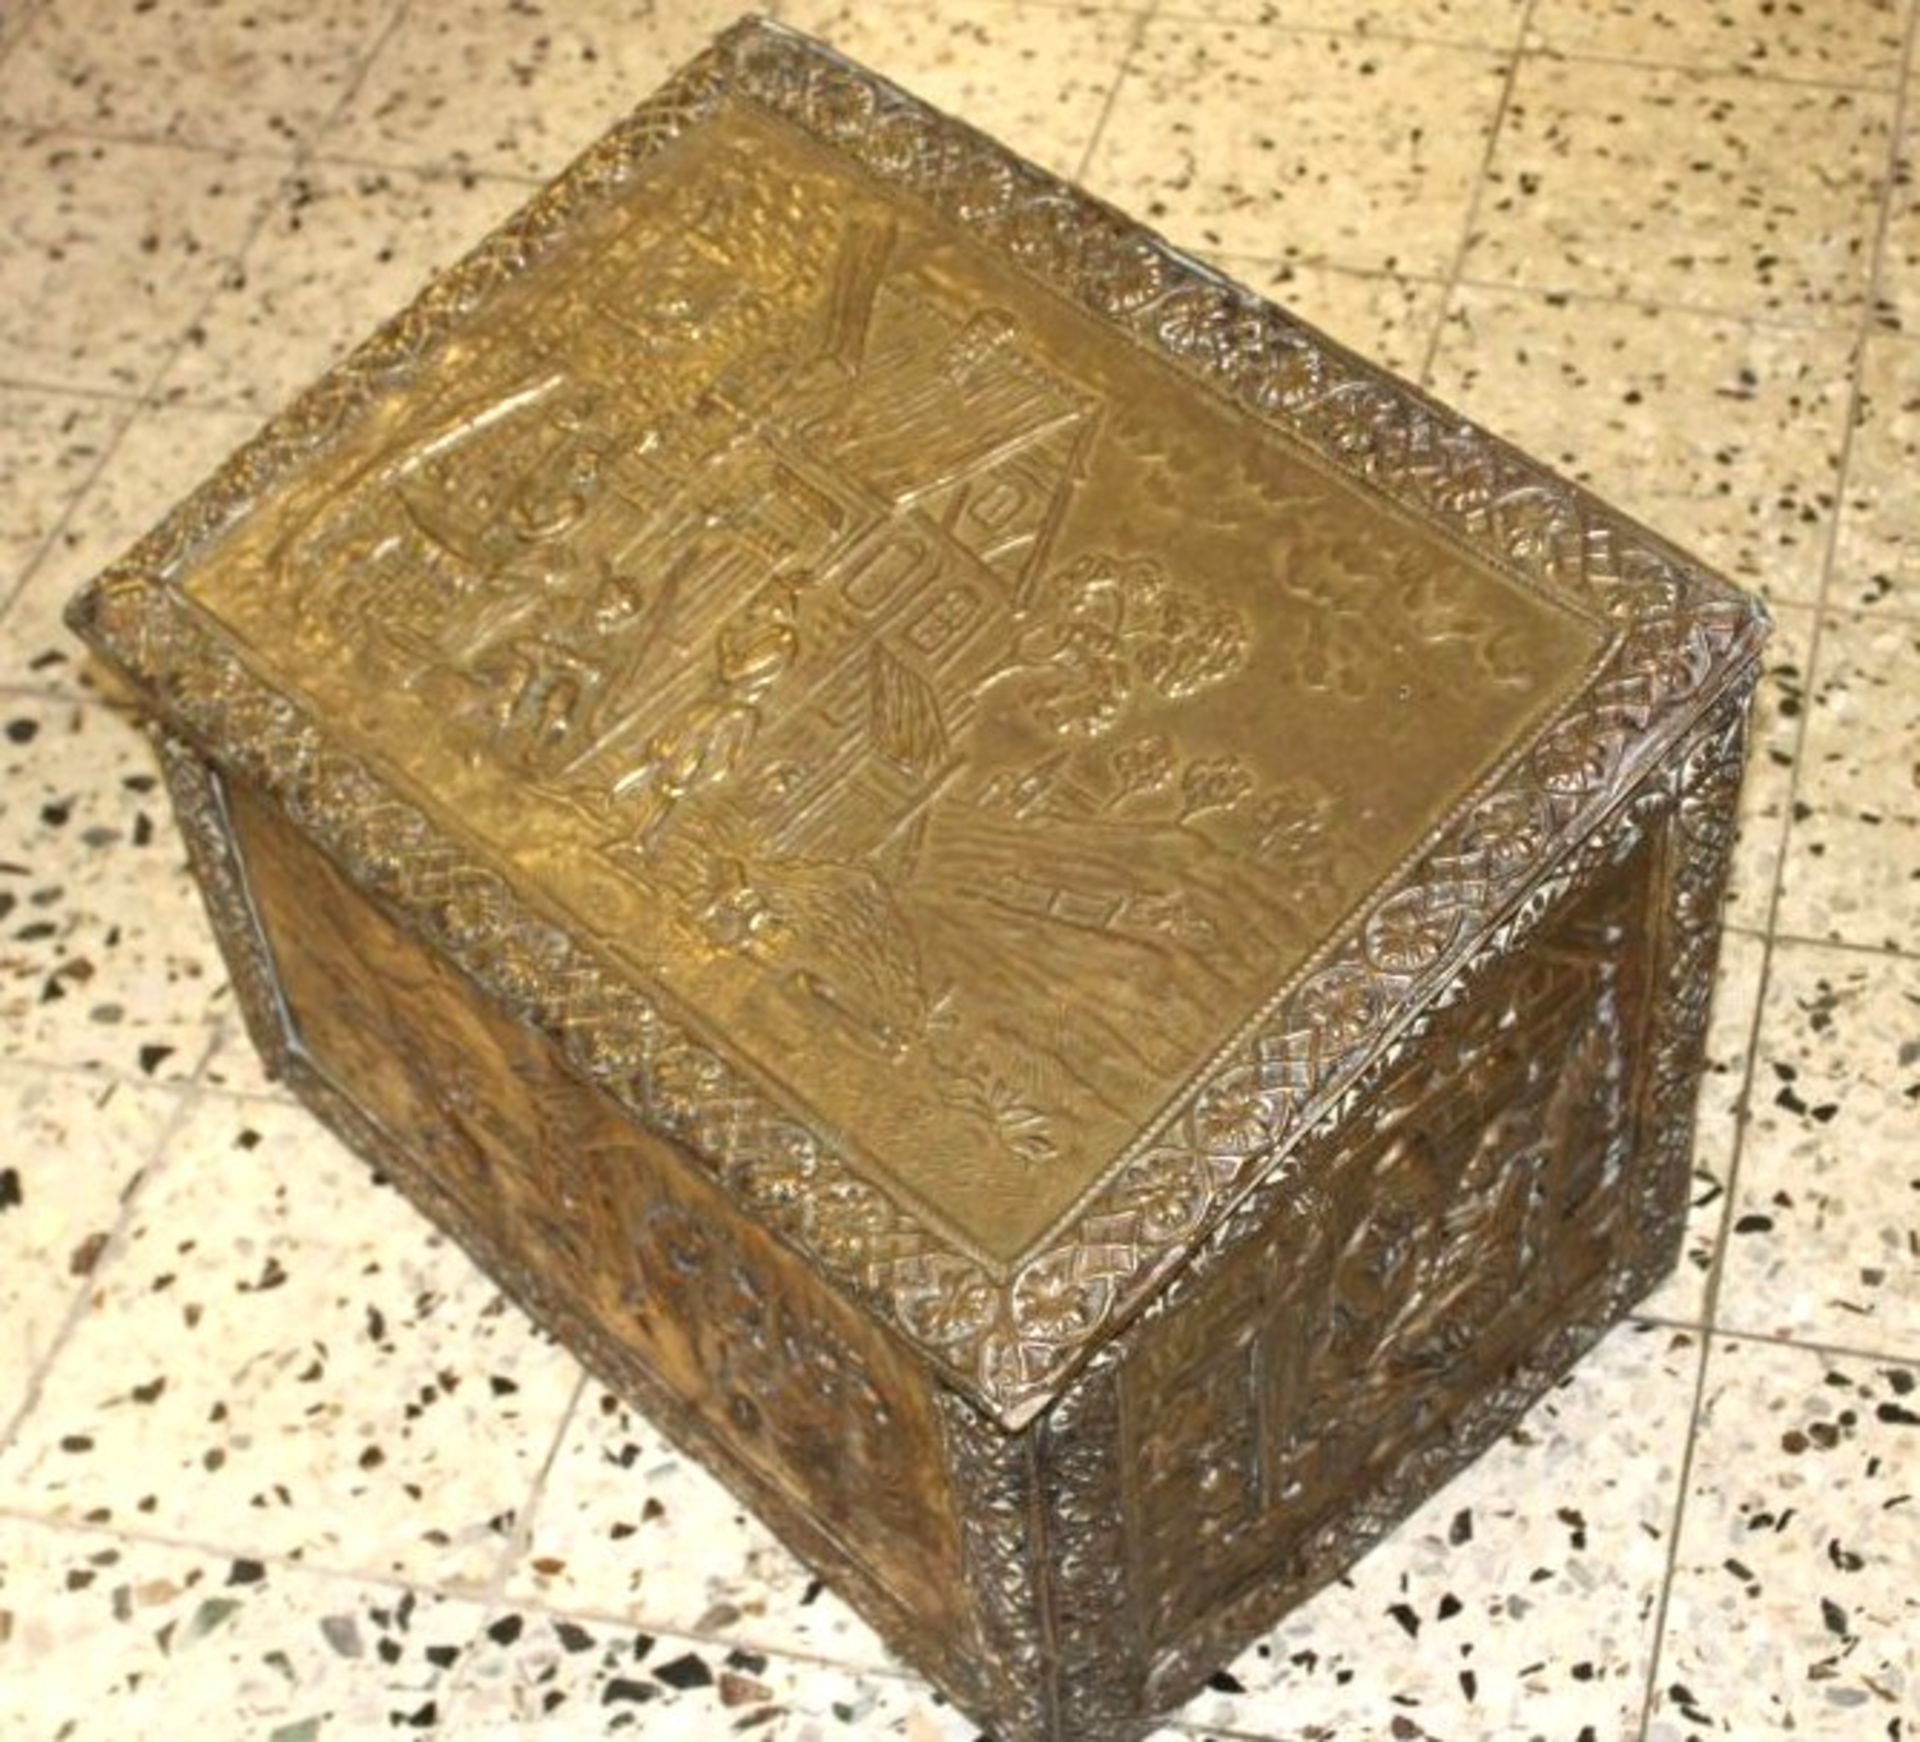 Kasten für Anfachholz / coal box, Messing über Holz, 1. H. 20. Jhd., England, H-35cm B-49cm T-34cm - Image 4 of 5